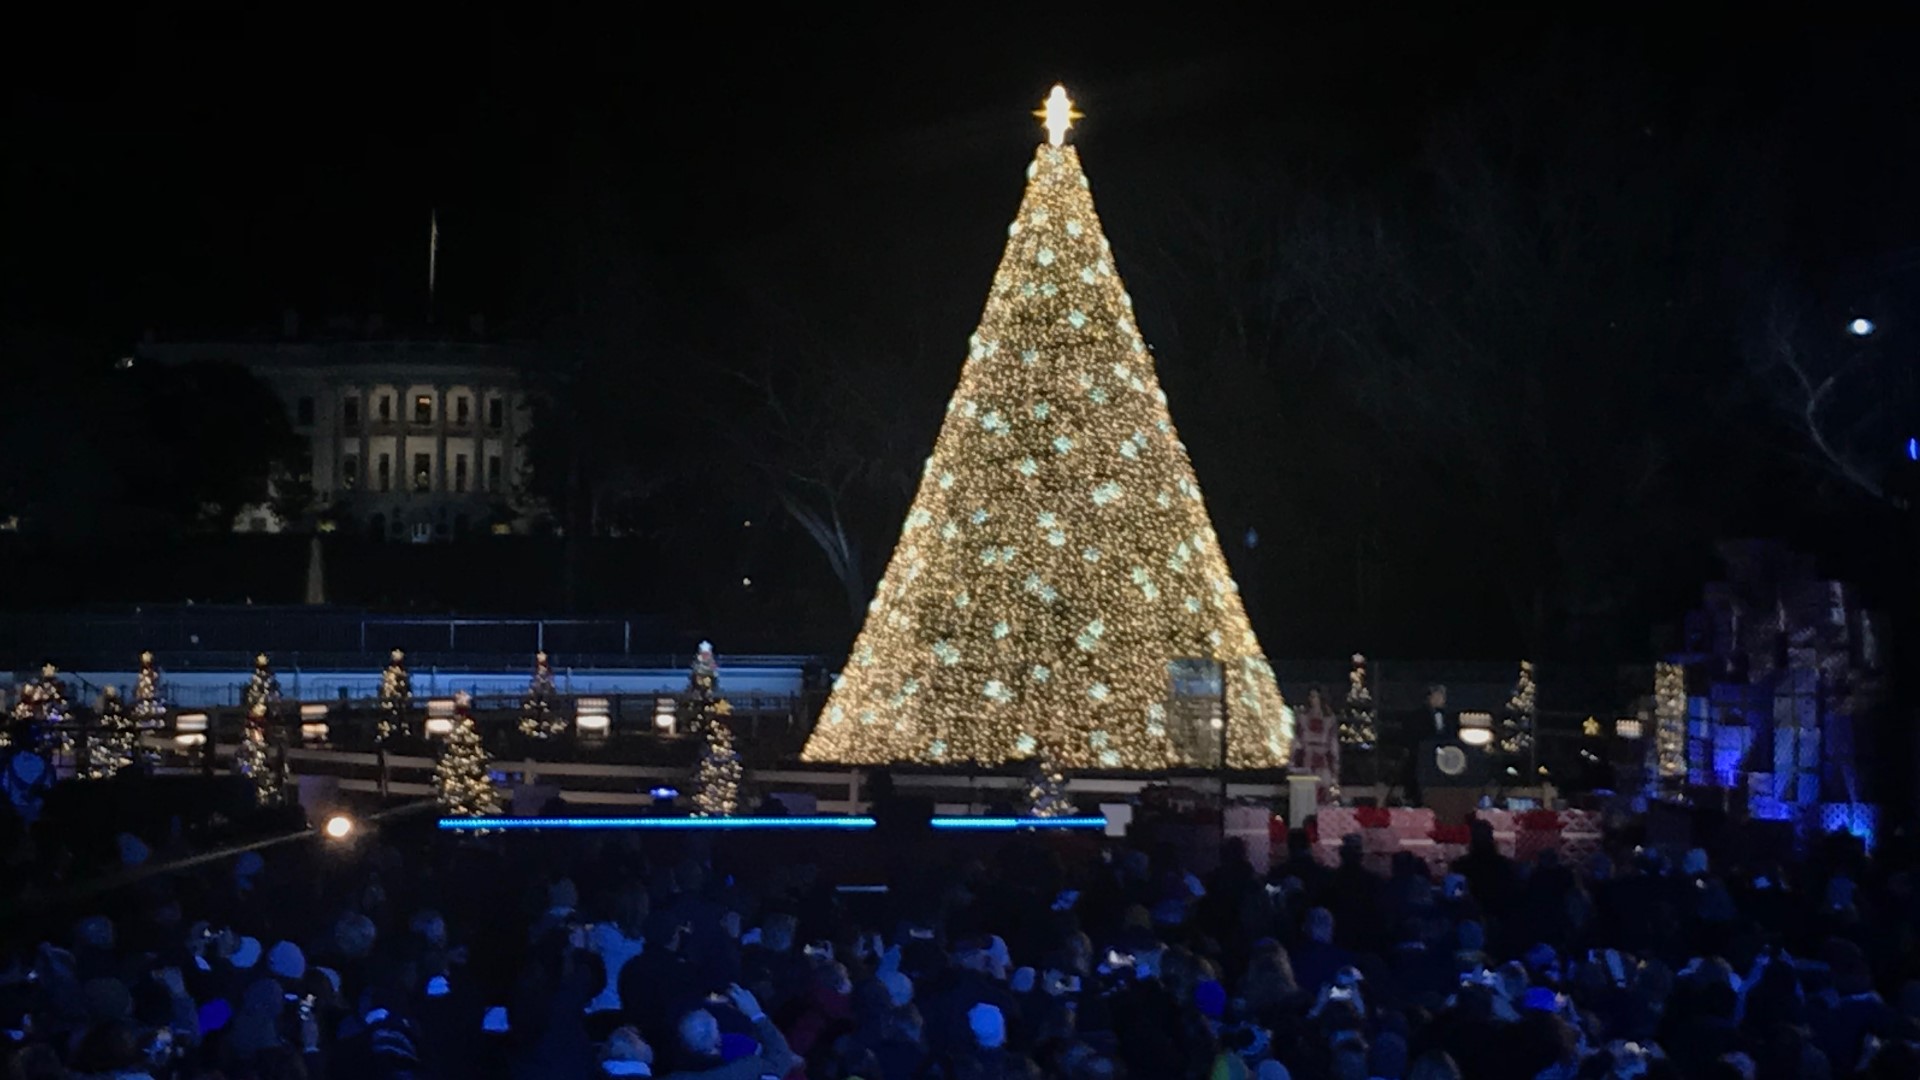 National Christmas Tree Lighting 2020 is virtual due to COVID19